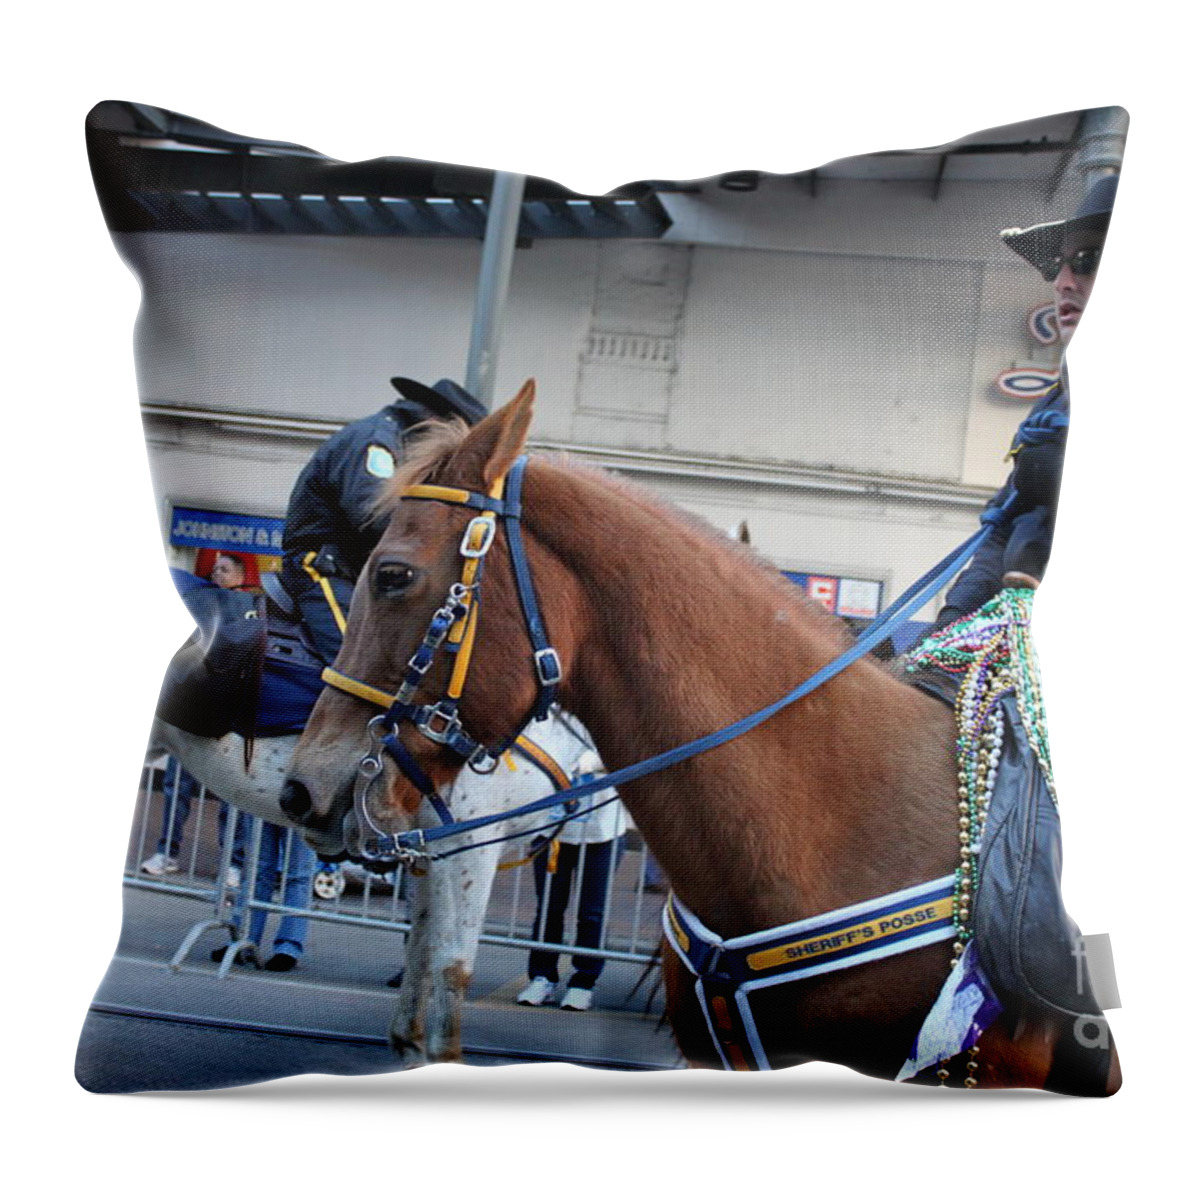 Mardi Gras Throw Pillow featuring the photograph Mardi Gras Cowboy on Horseback by Bev Conover